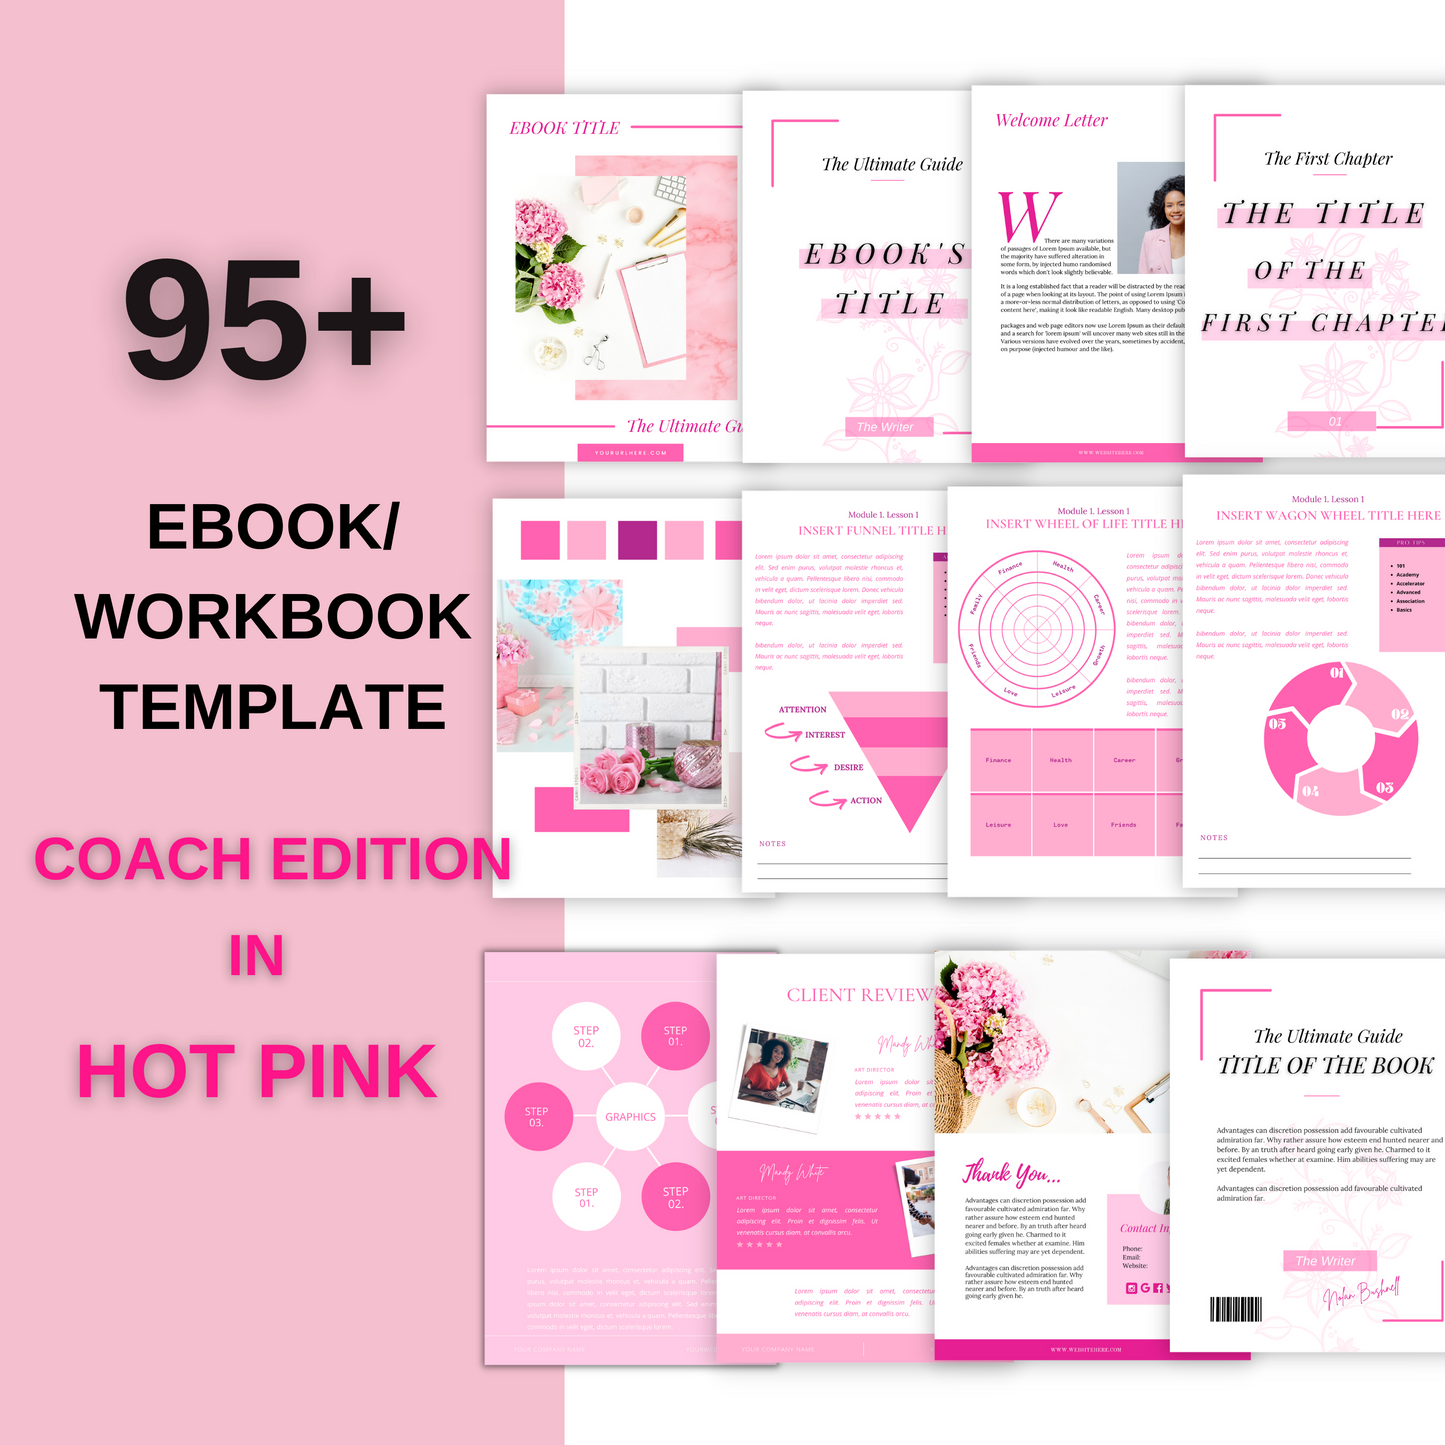 95+ Coach Edition in HOT PINK Ebook/Workbook Template canva